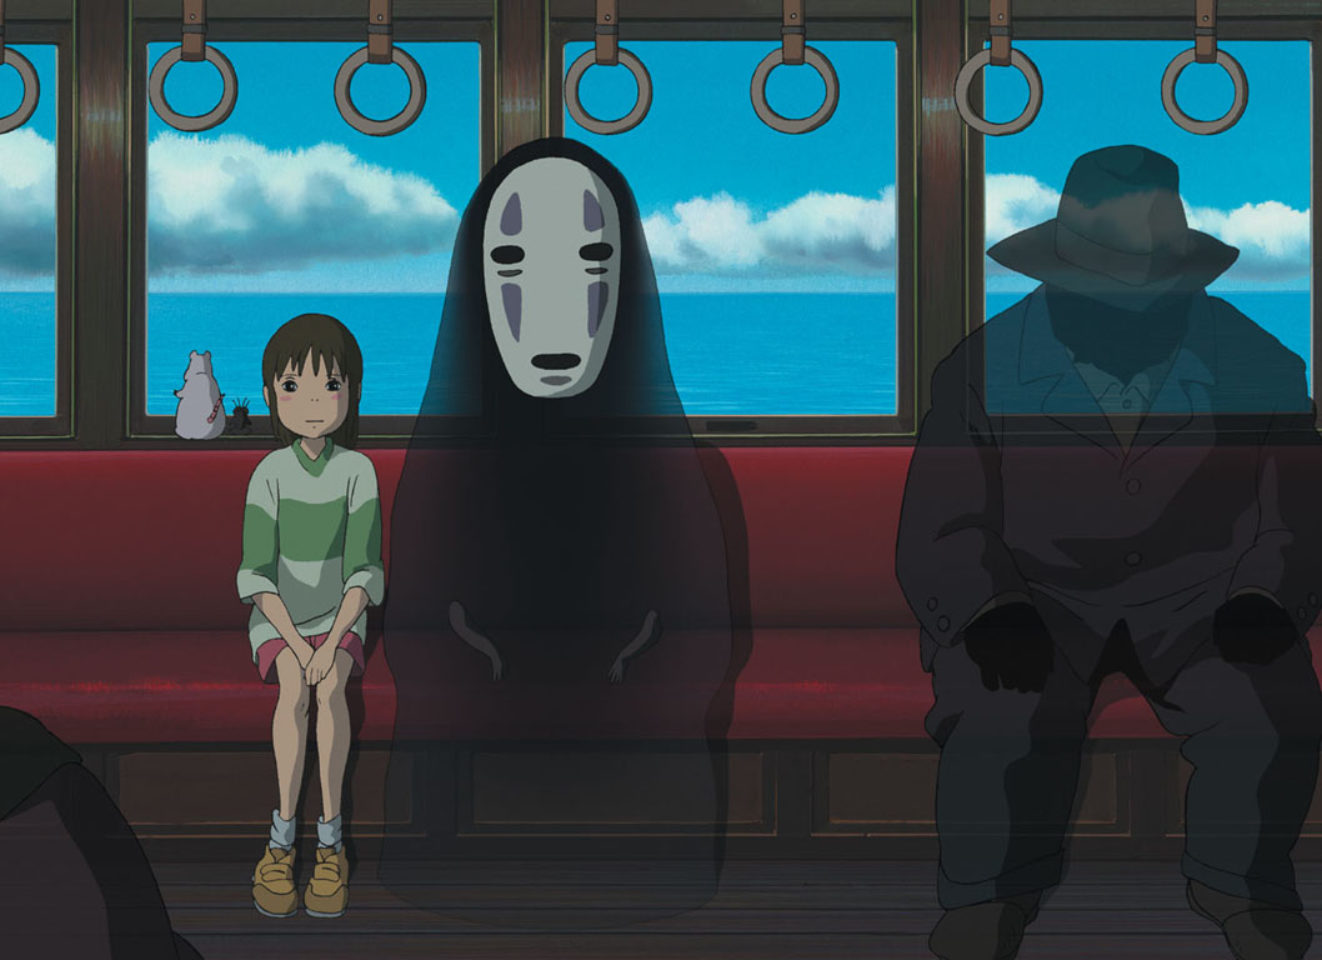 Hayao Miyazaki - Edition couleurs